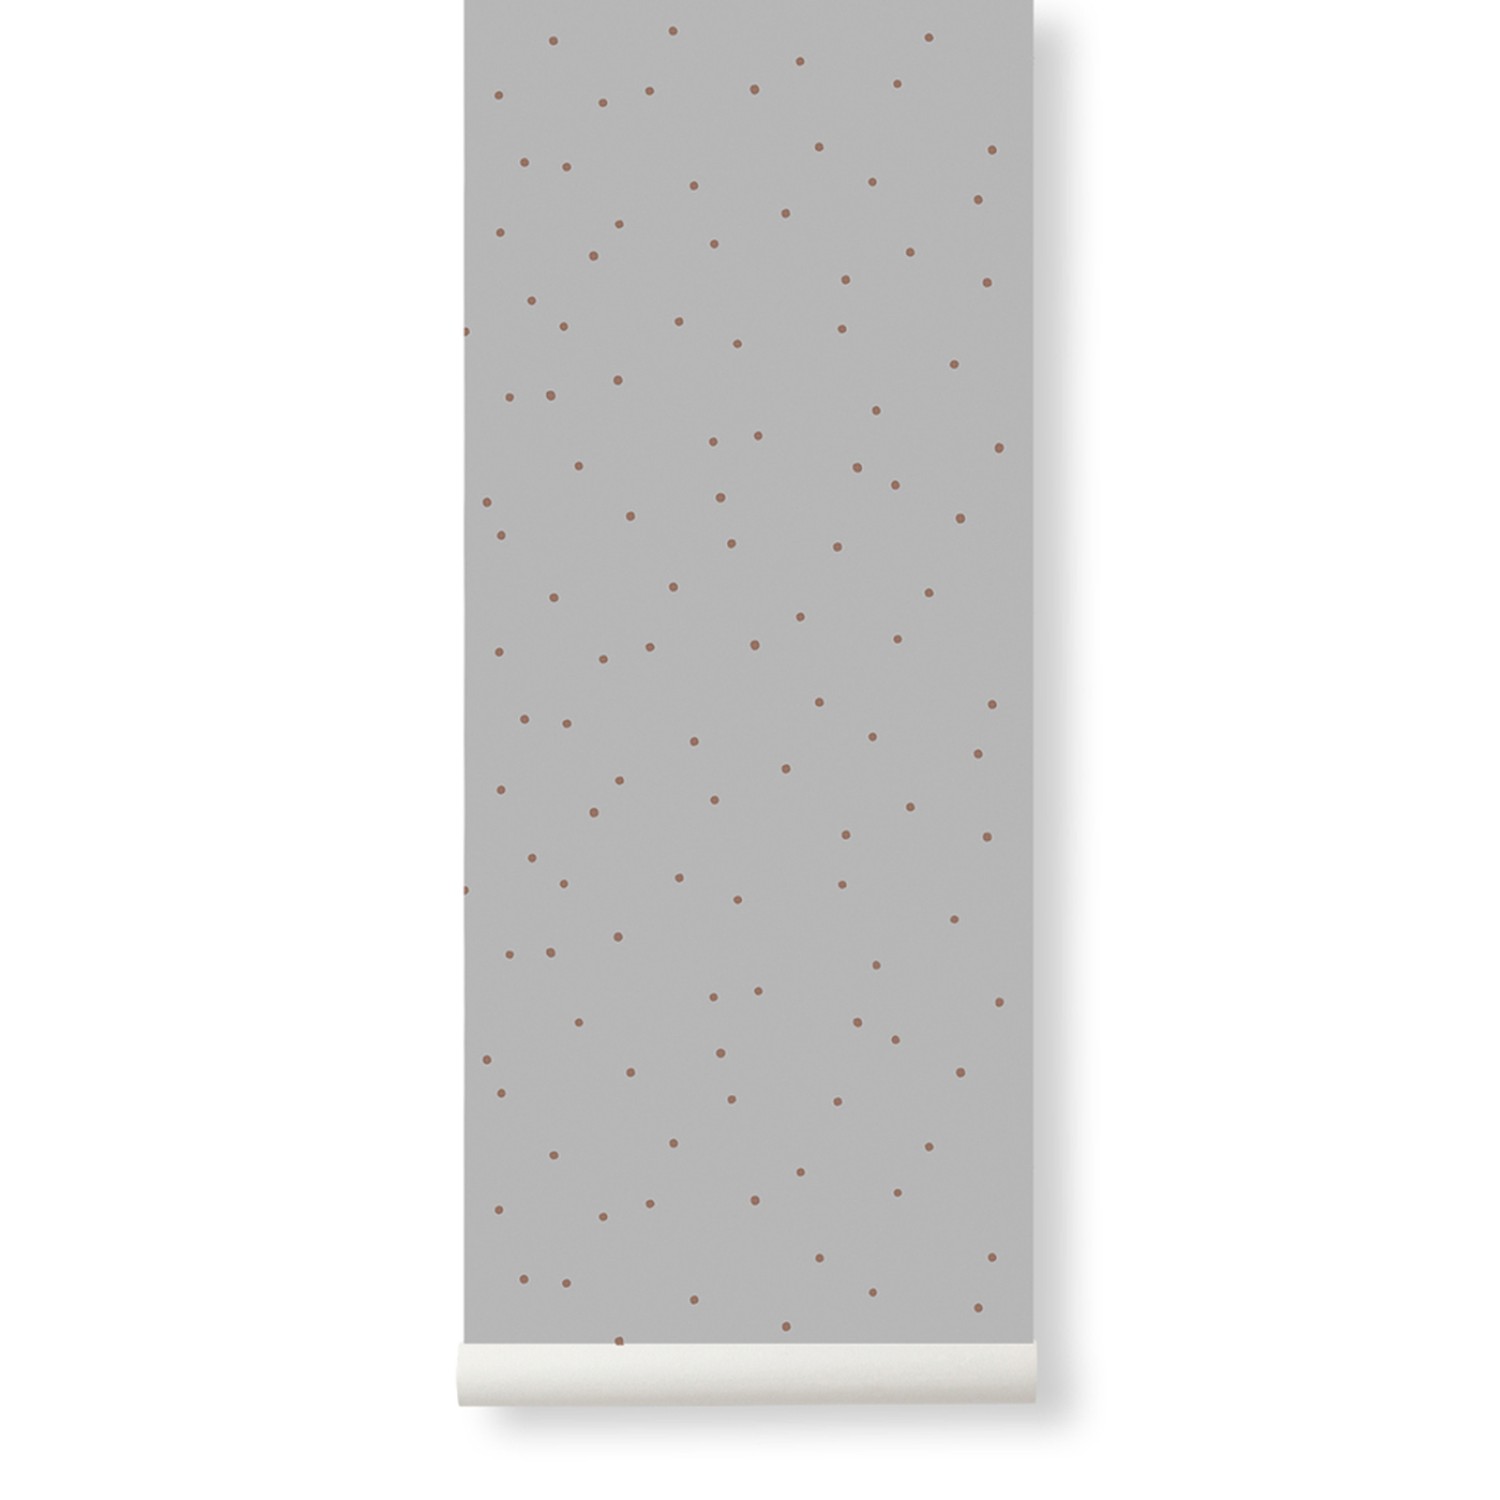 Dot Wallpaper
Grey